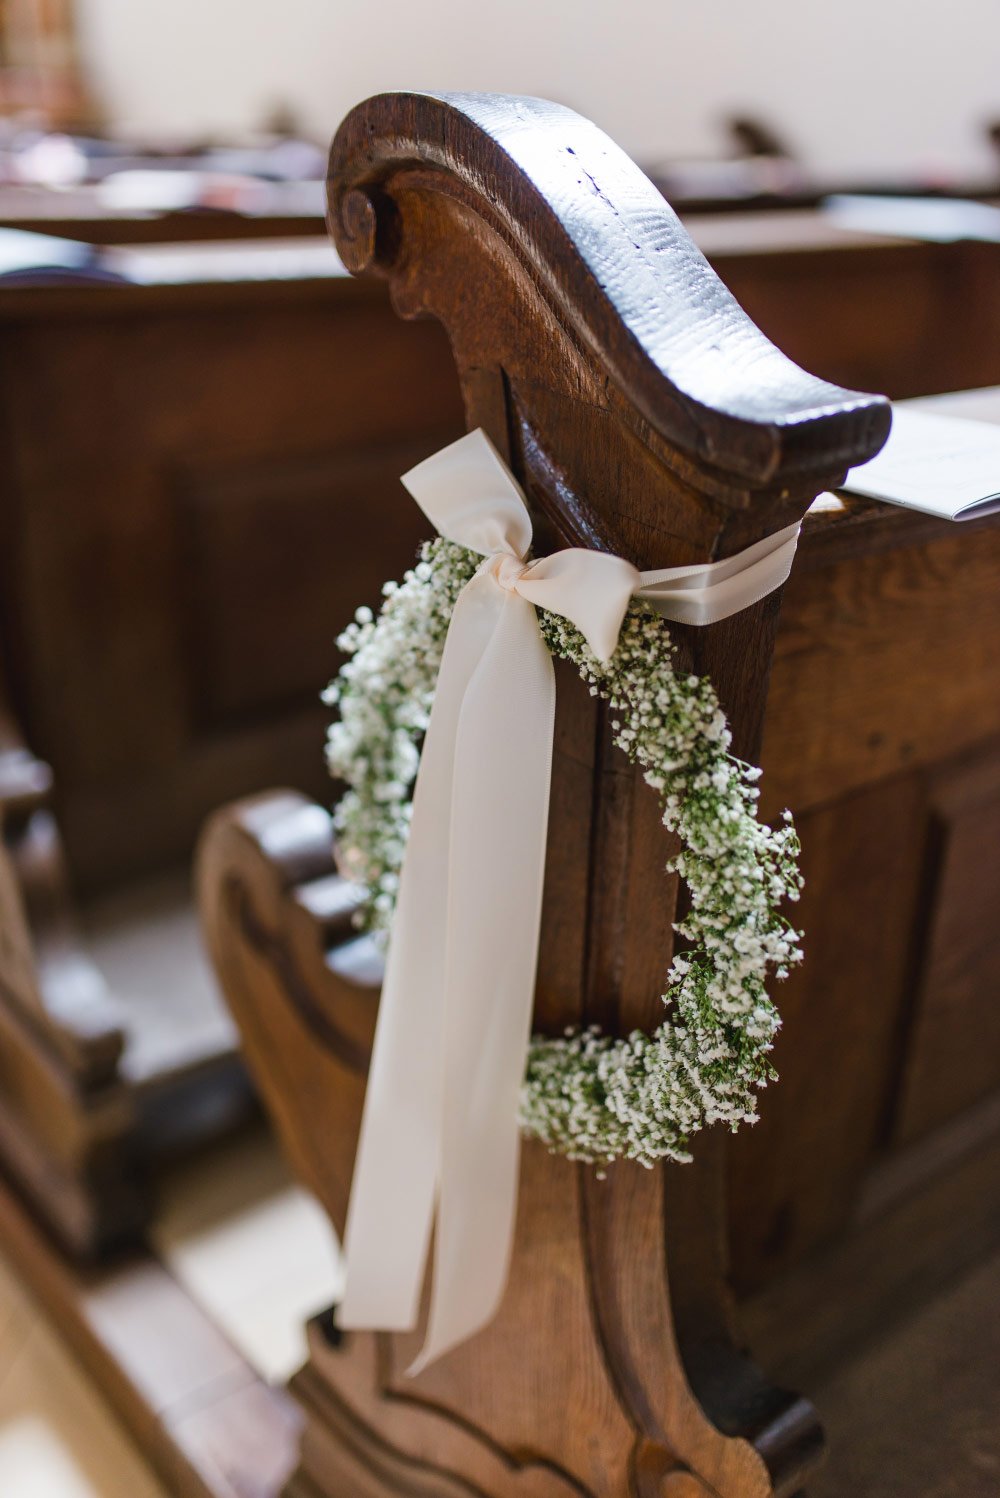 1632400866 694 Decorating a church wedding ideas tips - Decorating a church wedding: ideas & tips